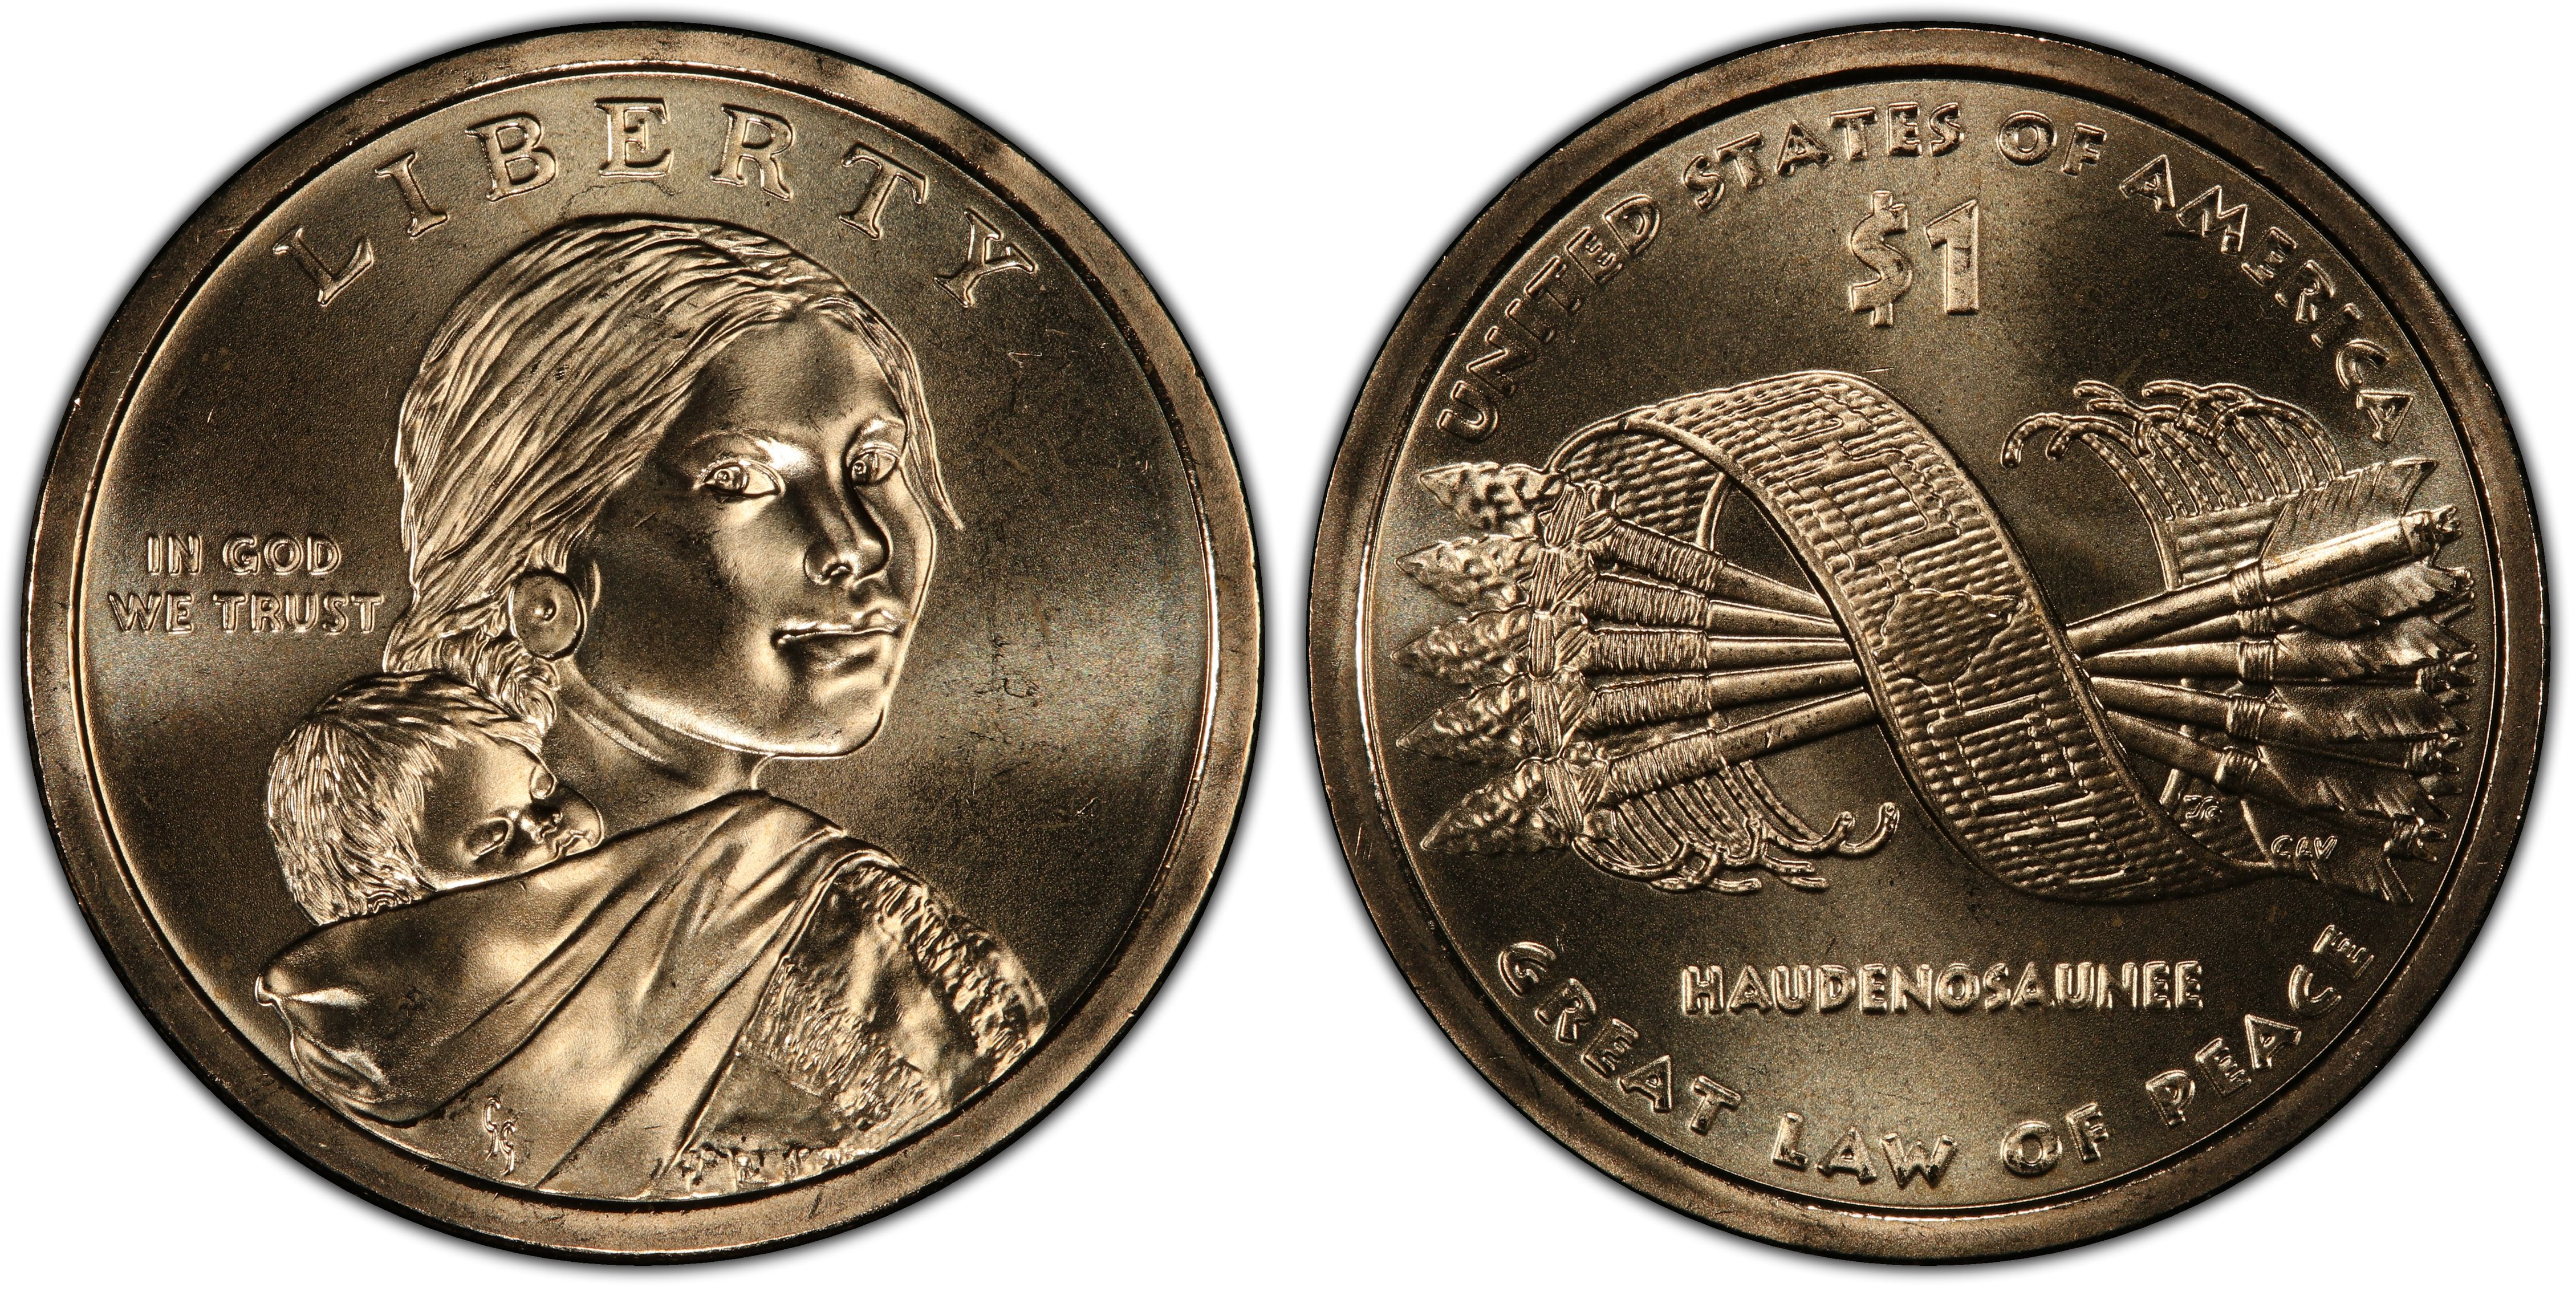 2010-P Good Circulated Roll of $25 Sacagawea Native American $1 Dollar Coins 